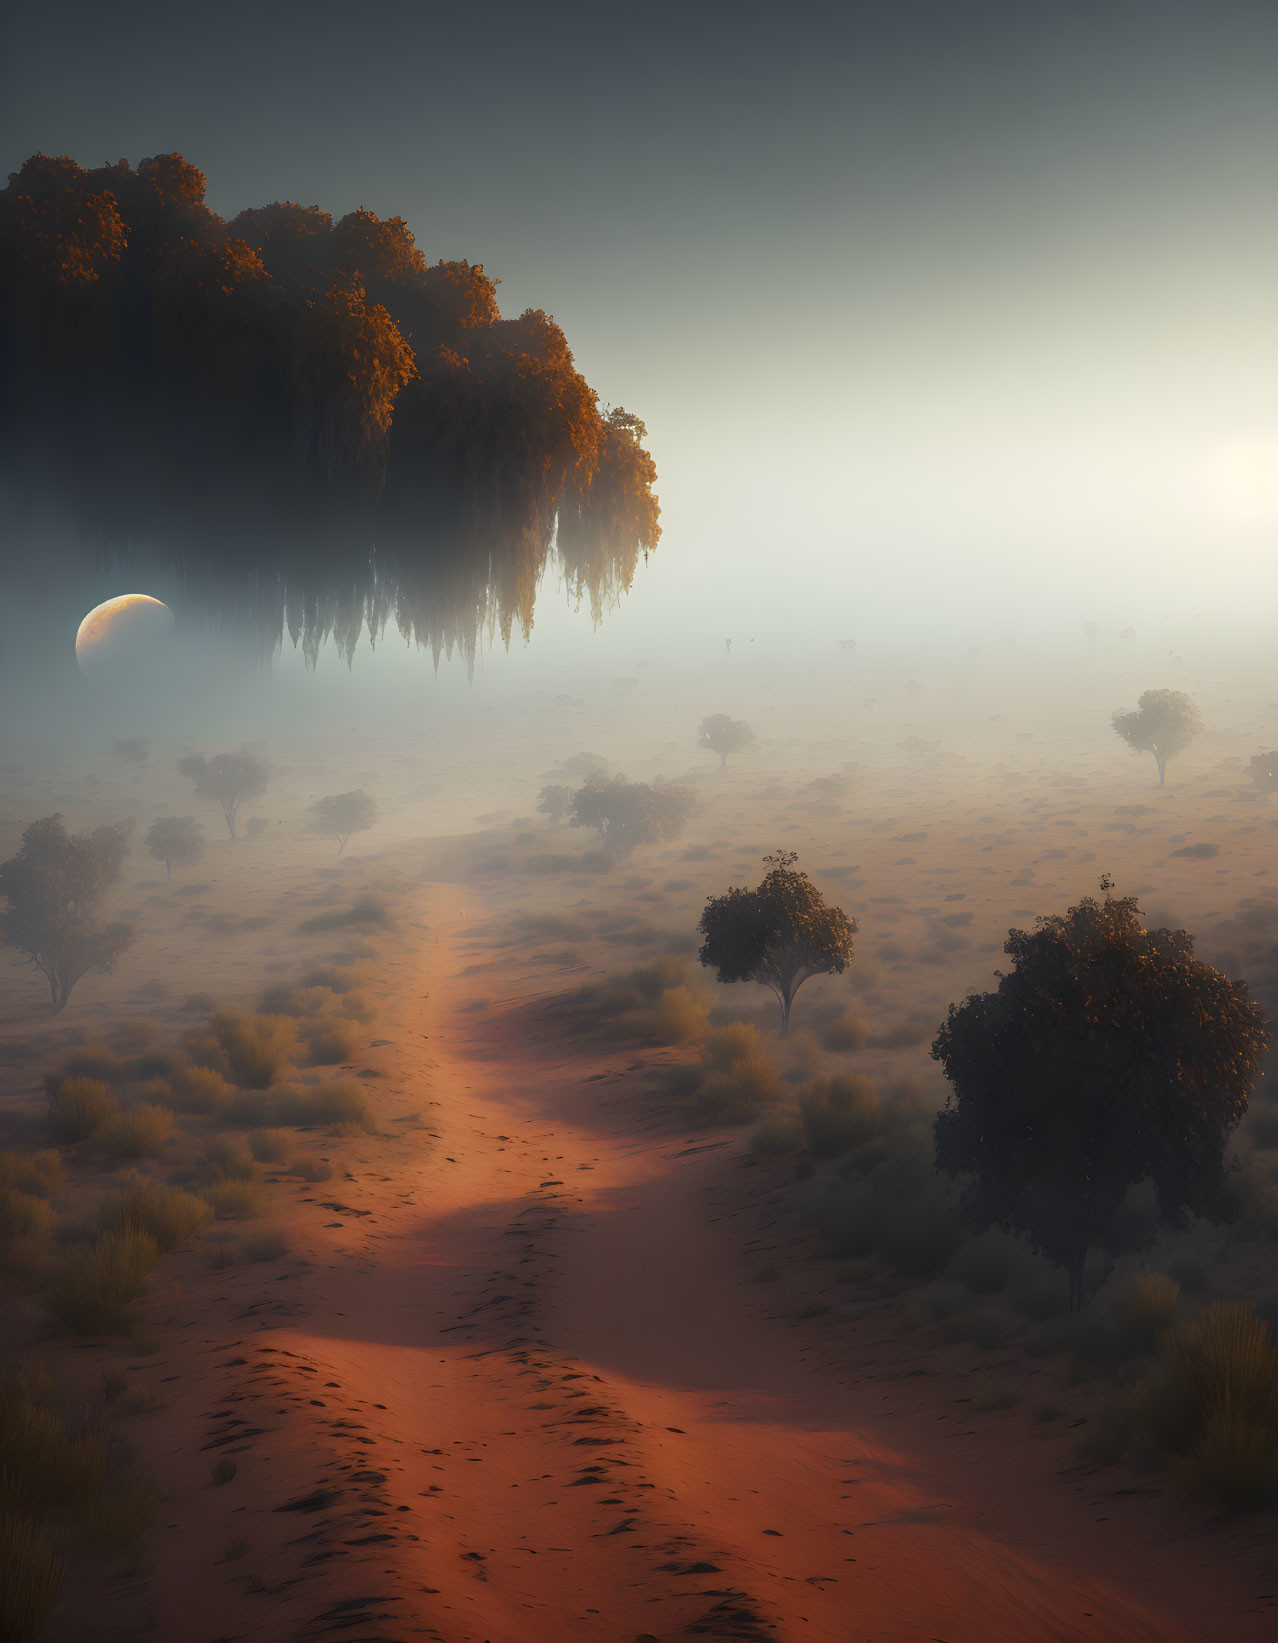 road in the desert © Gerald B.